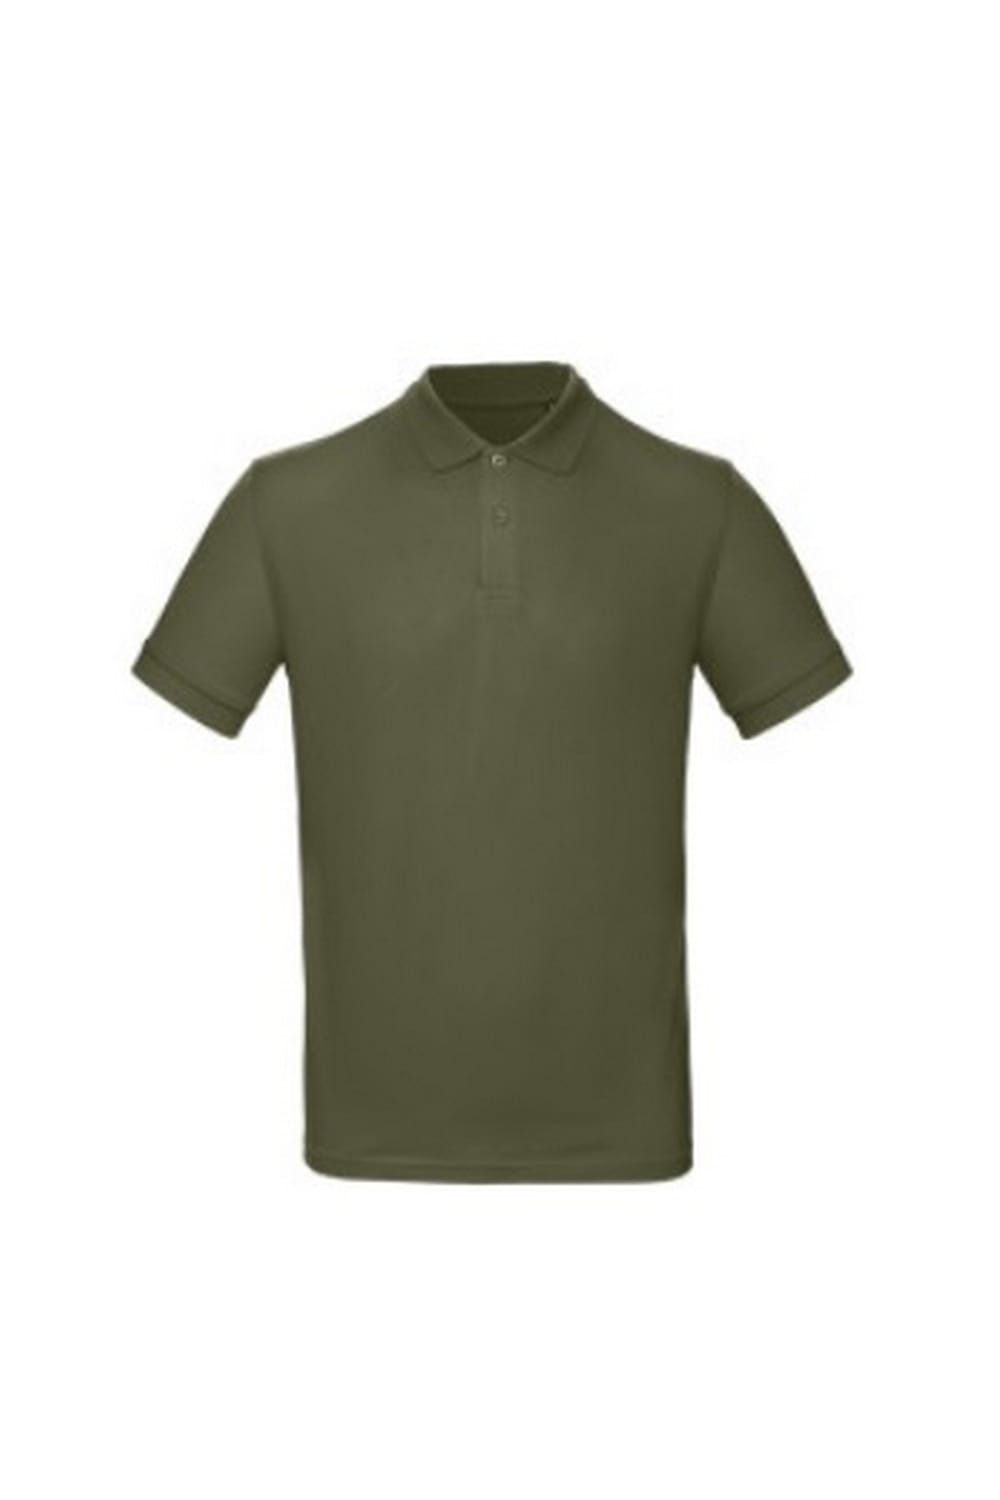 B&C Collection Mens Inspire Polo Shirt (Urban Khaki)